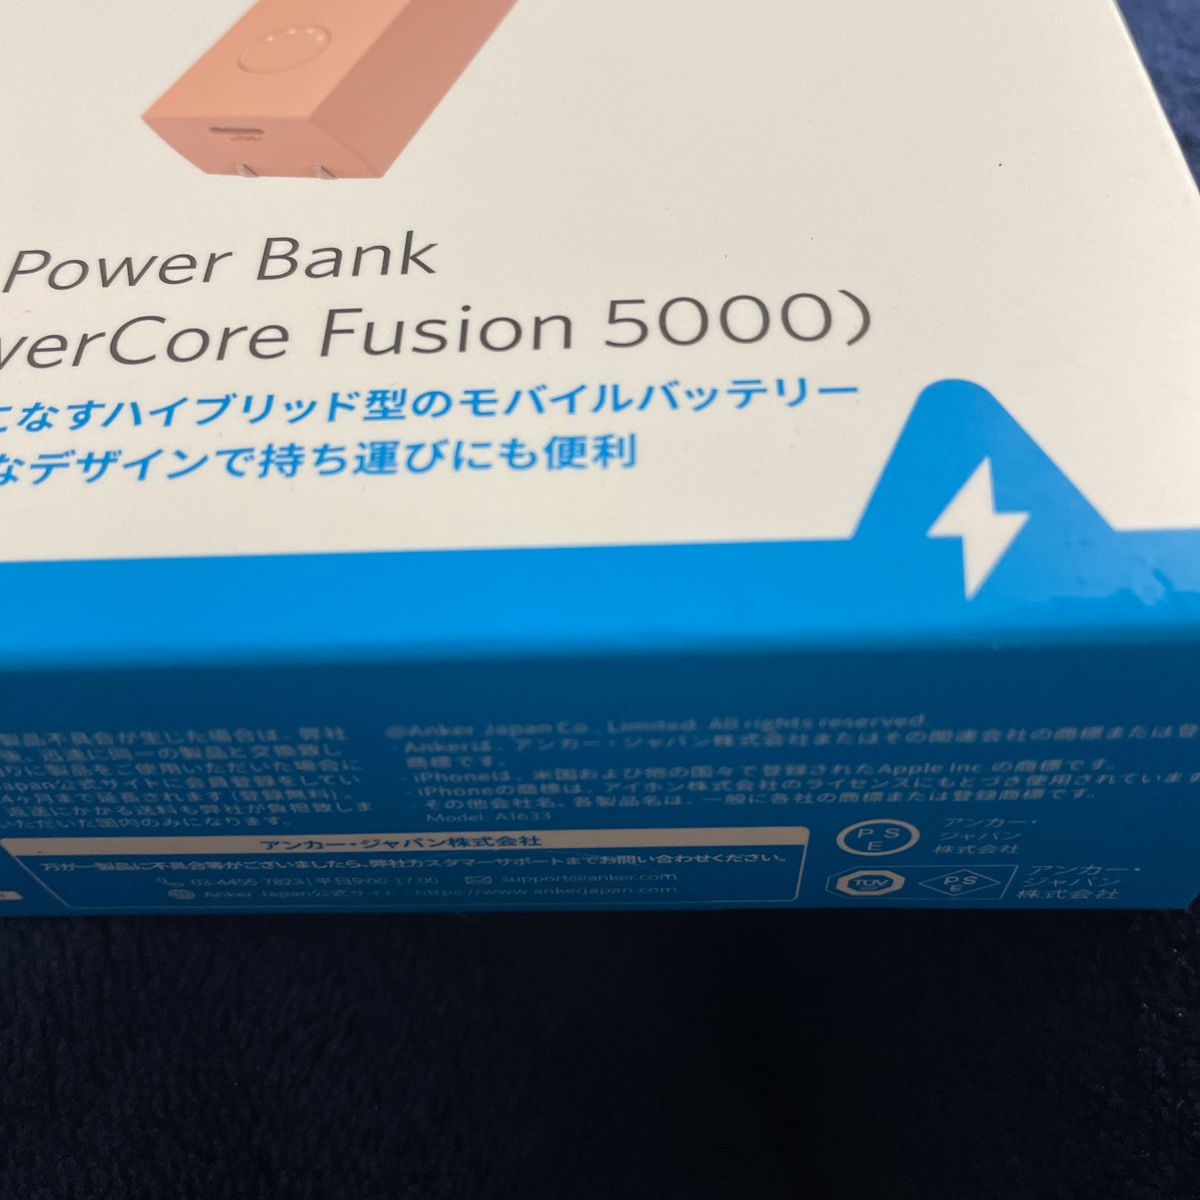 Anker 511 Power Bank (PowerCore Fusion 5000) (5000mAhモバイルバッテリー搭載 